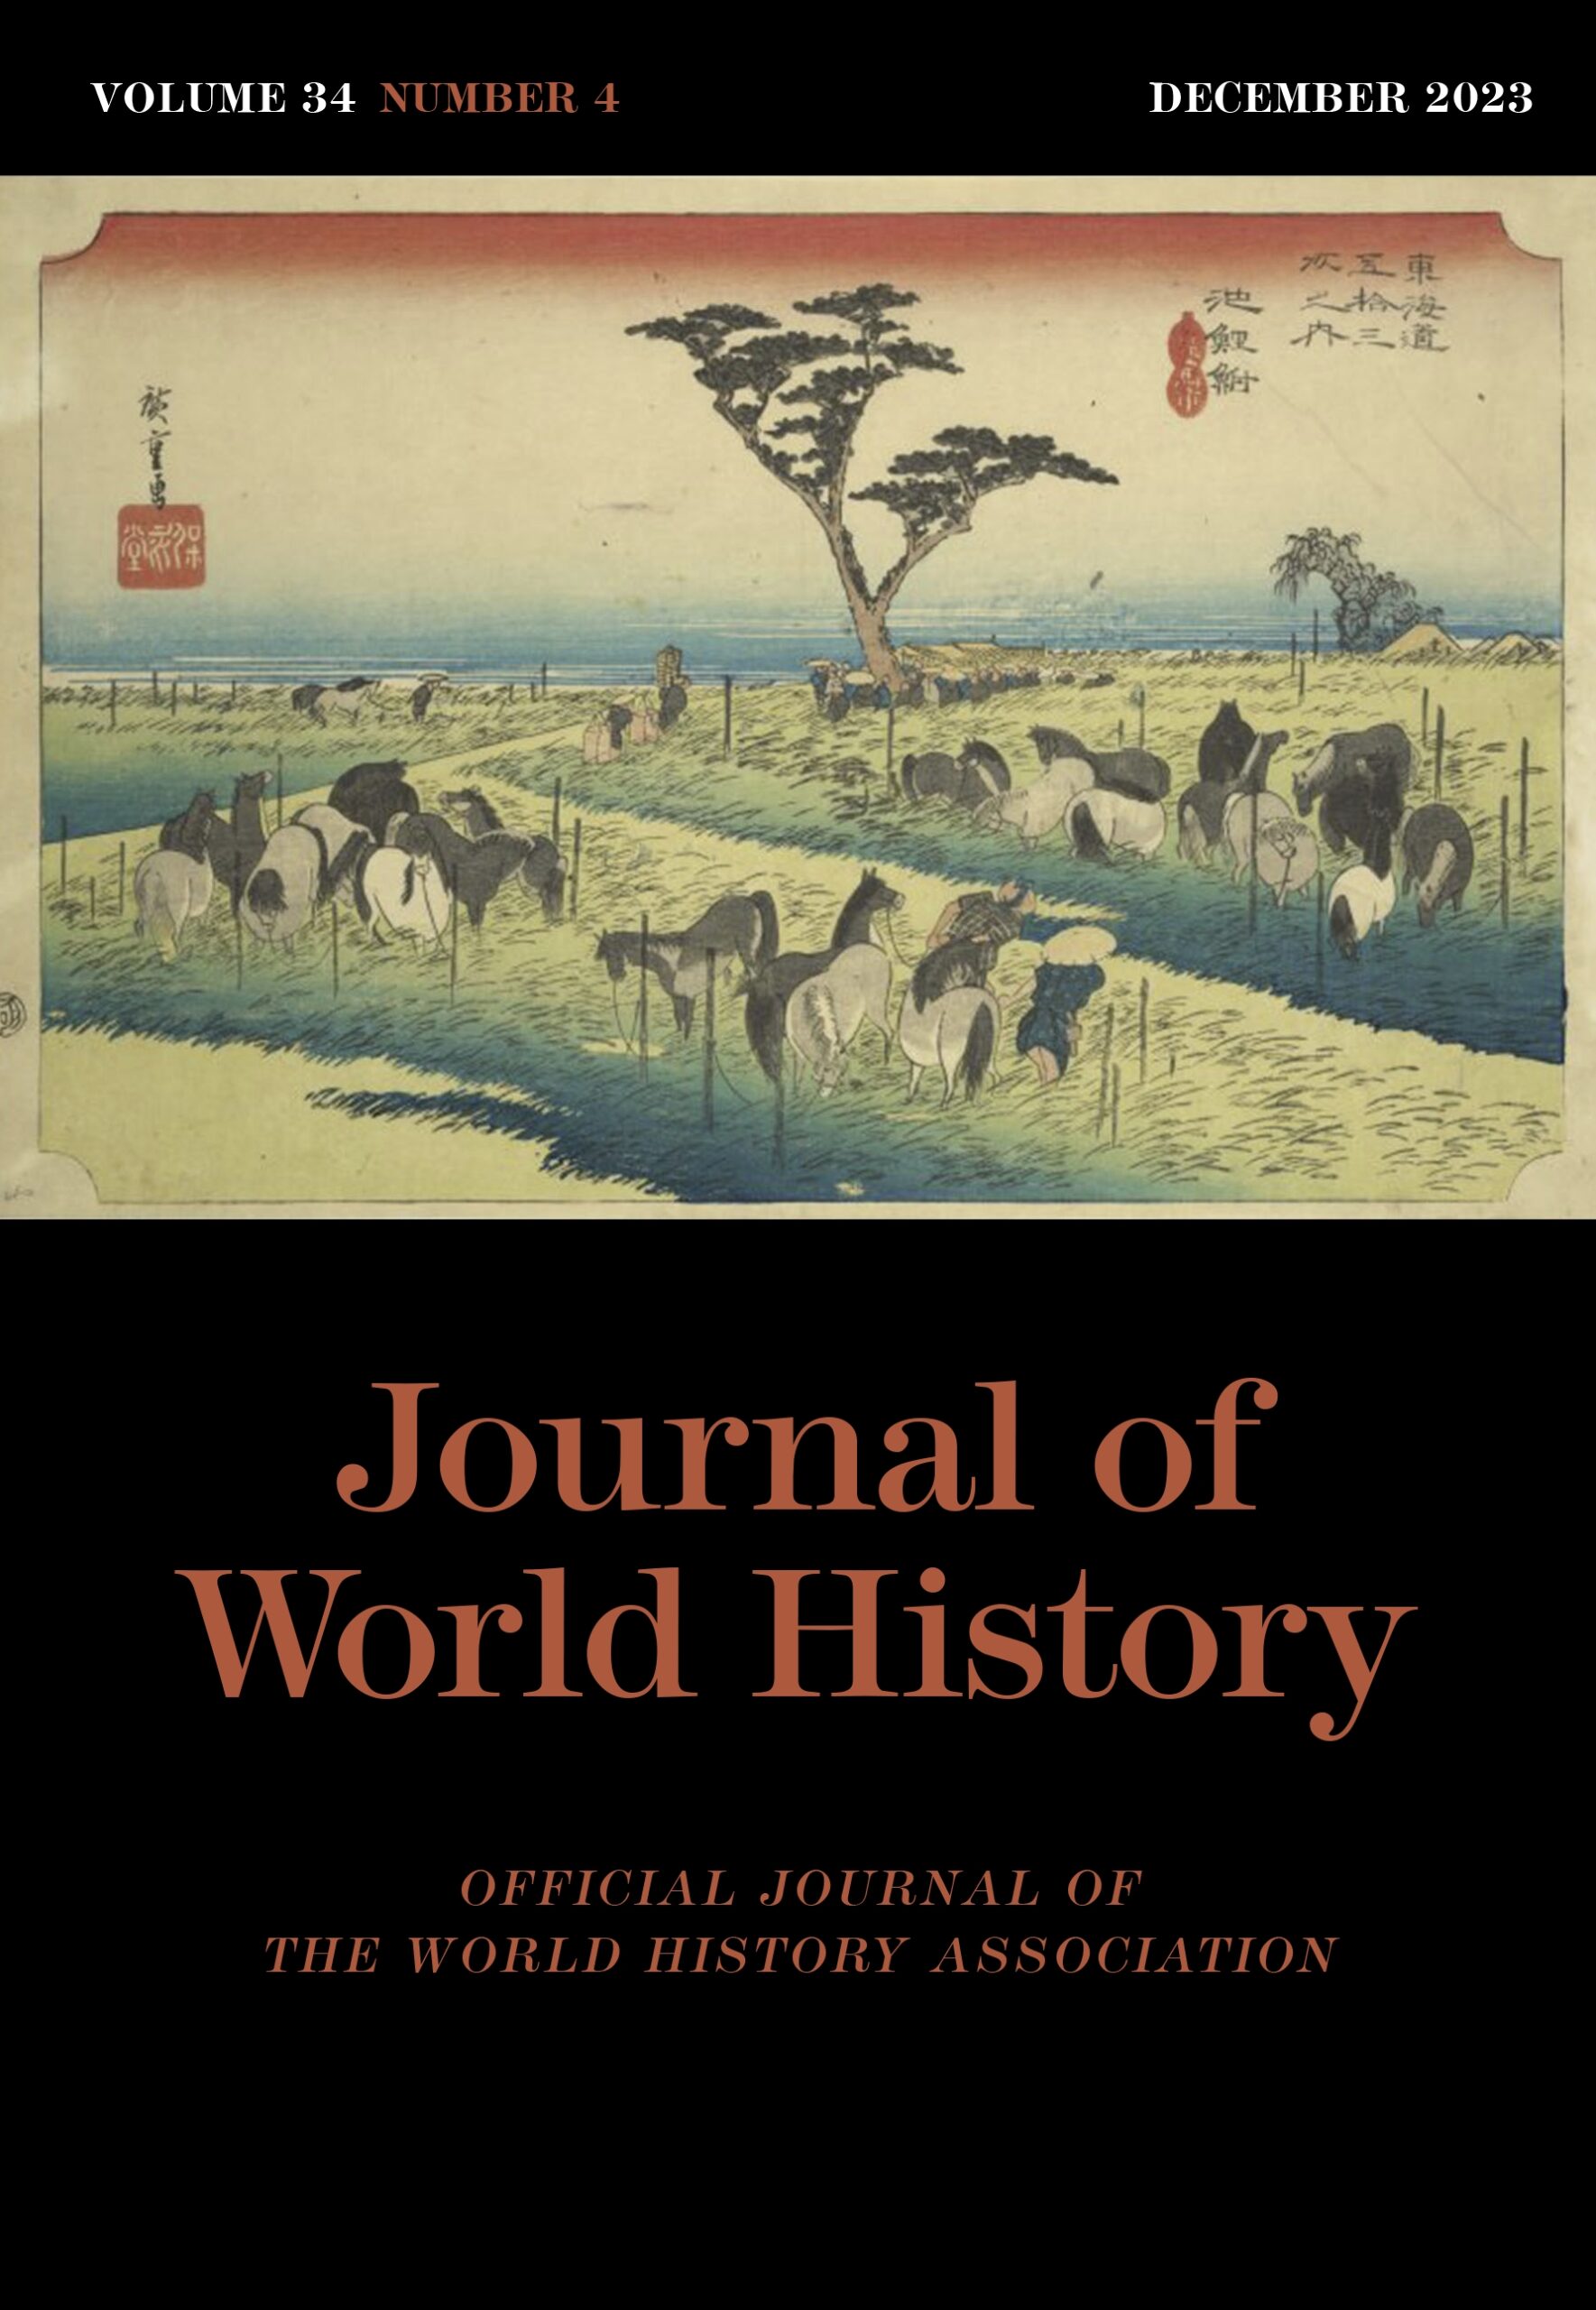 Press　World　of　–　UH　Journal　History